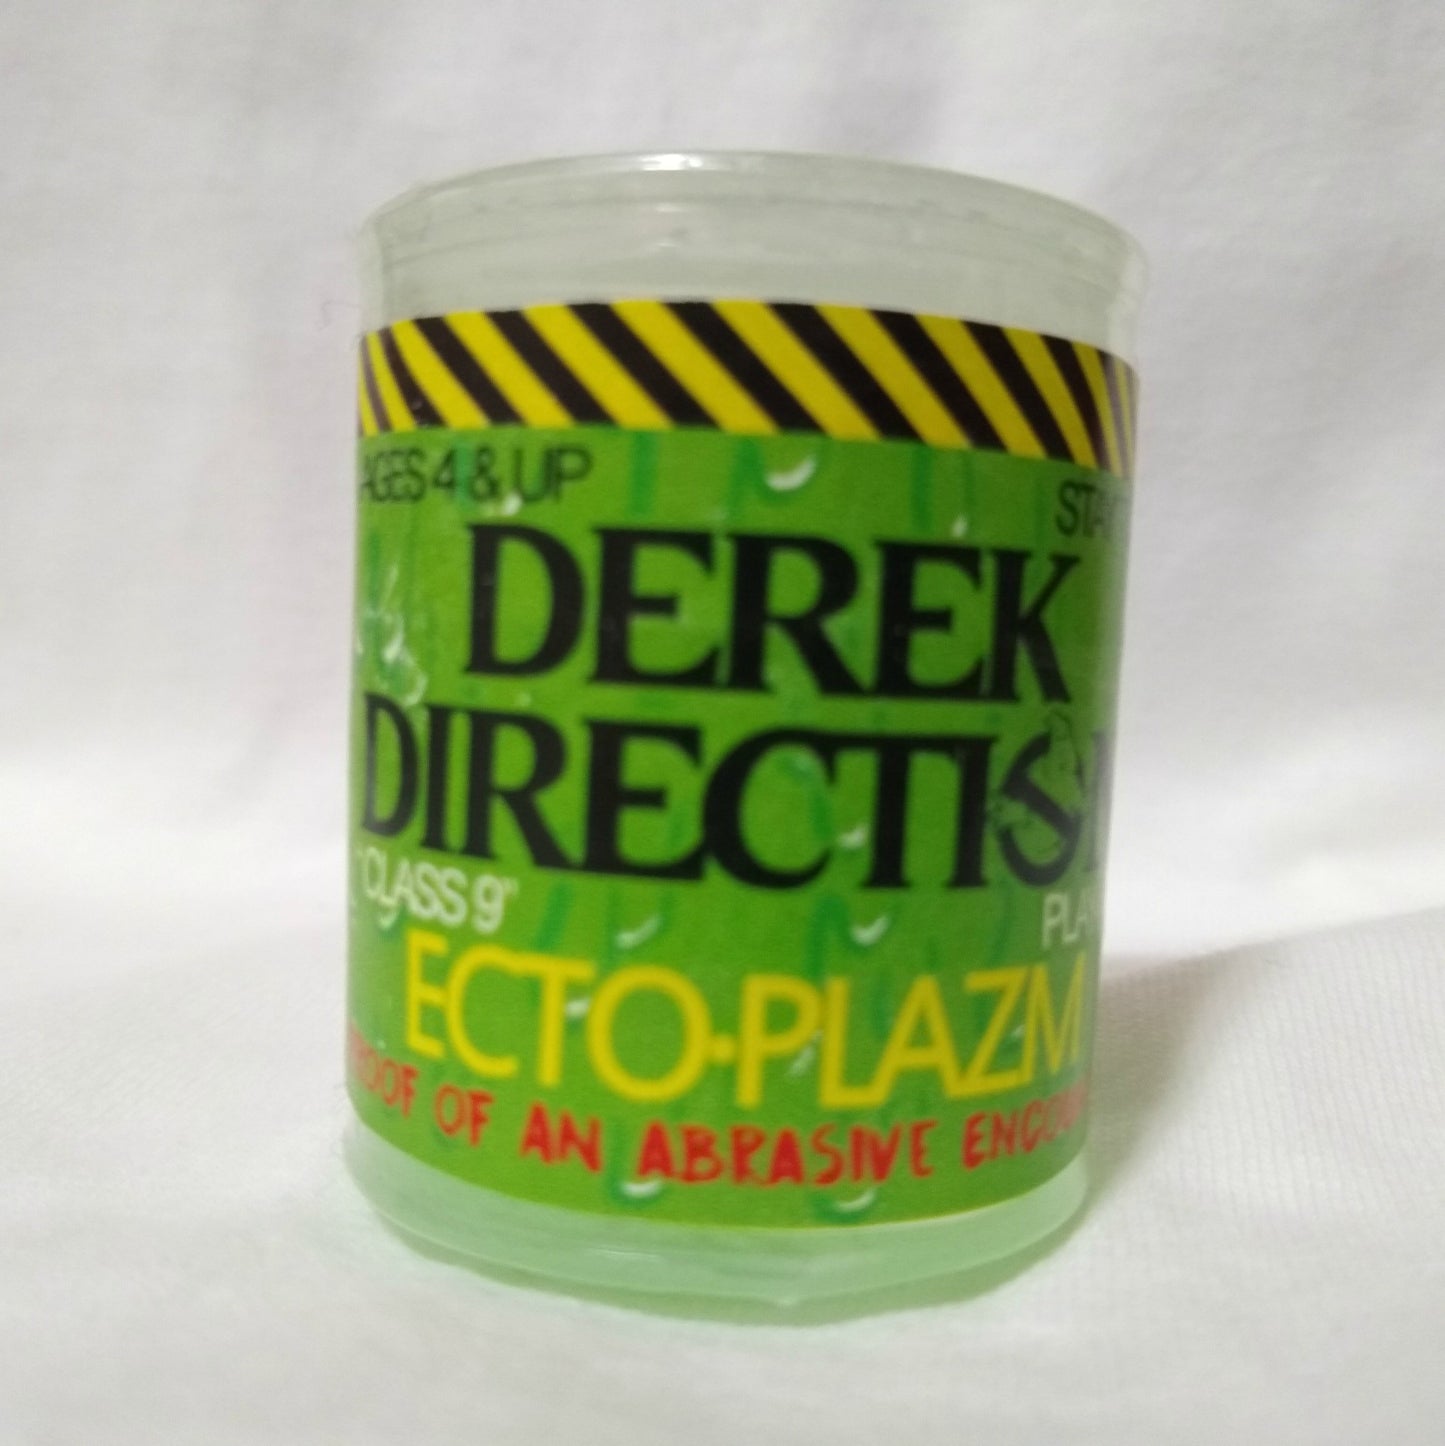 DEREK DIRECTION 'ECTO-PLAZMA' (Slime)